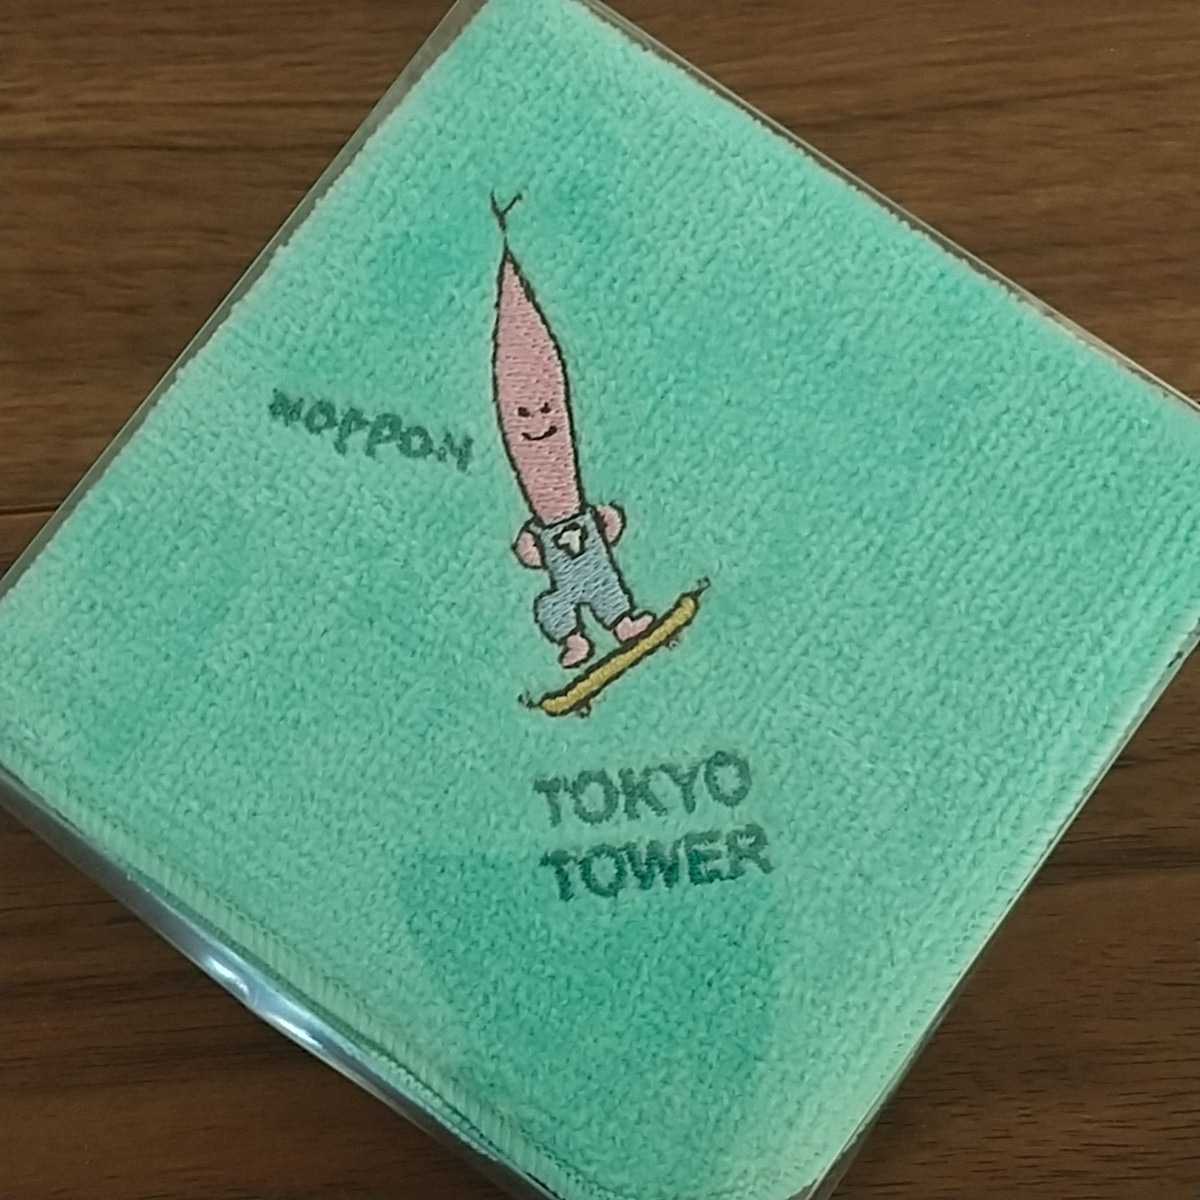 **TOKYO TOWERnopon** towel Mini handkerchie Tokyo tower character retro 